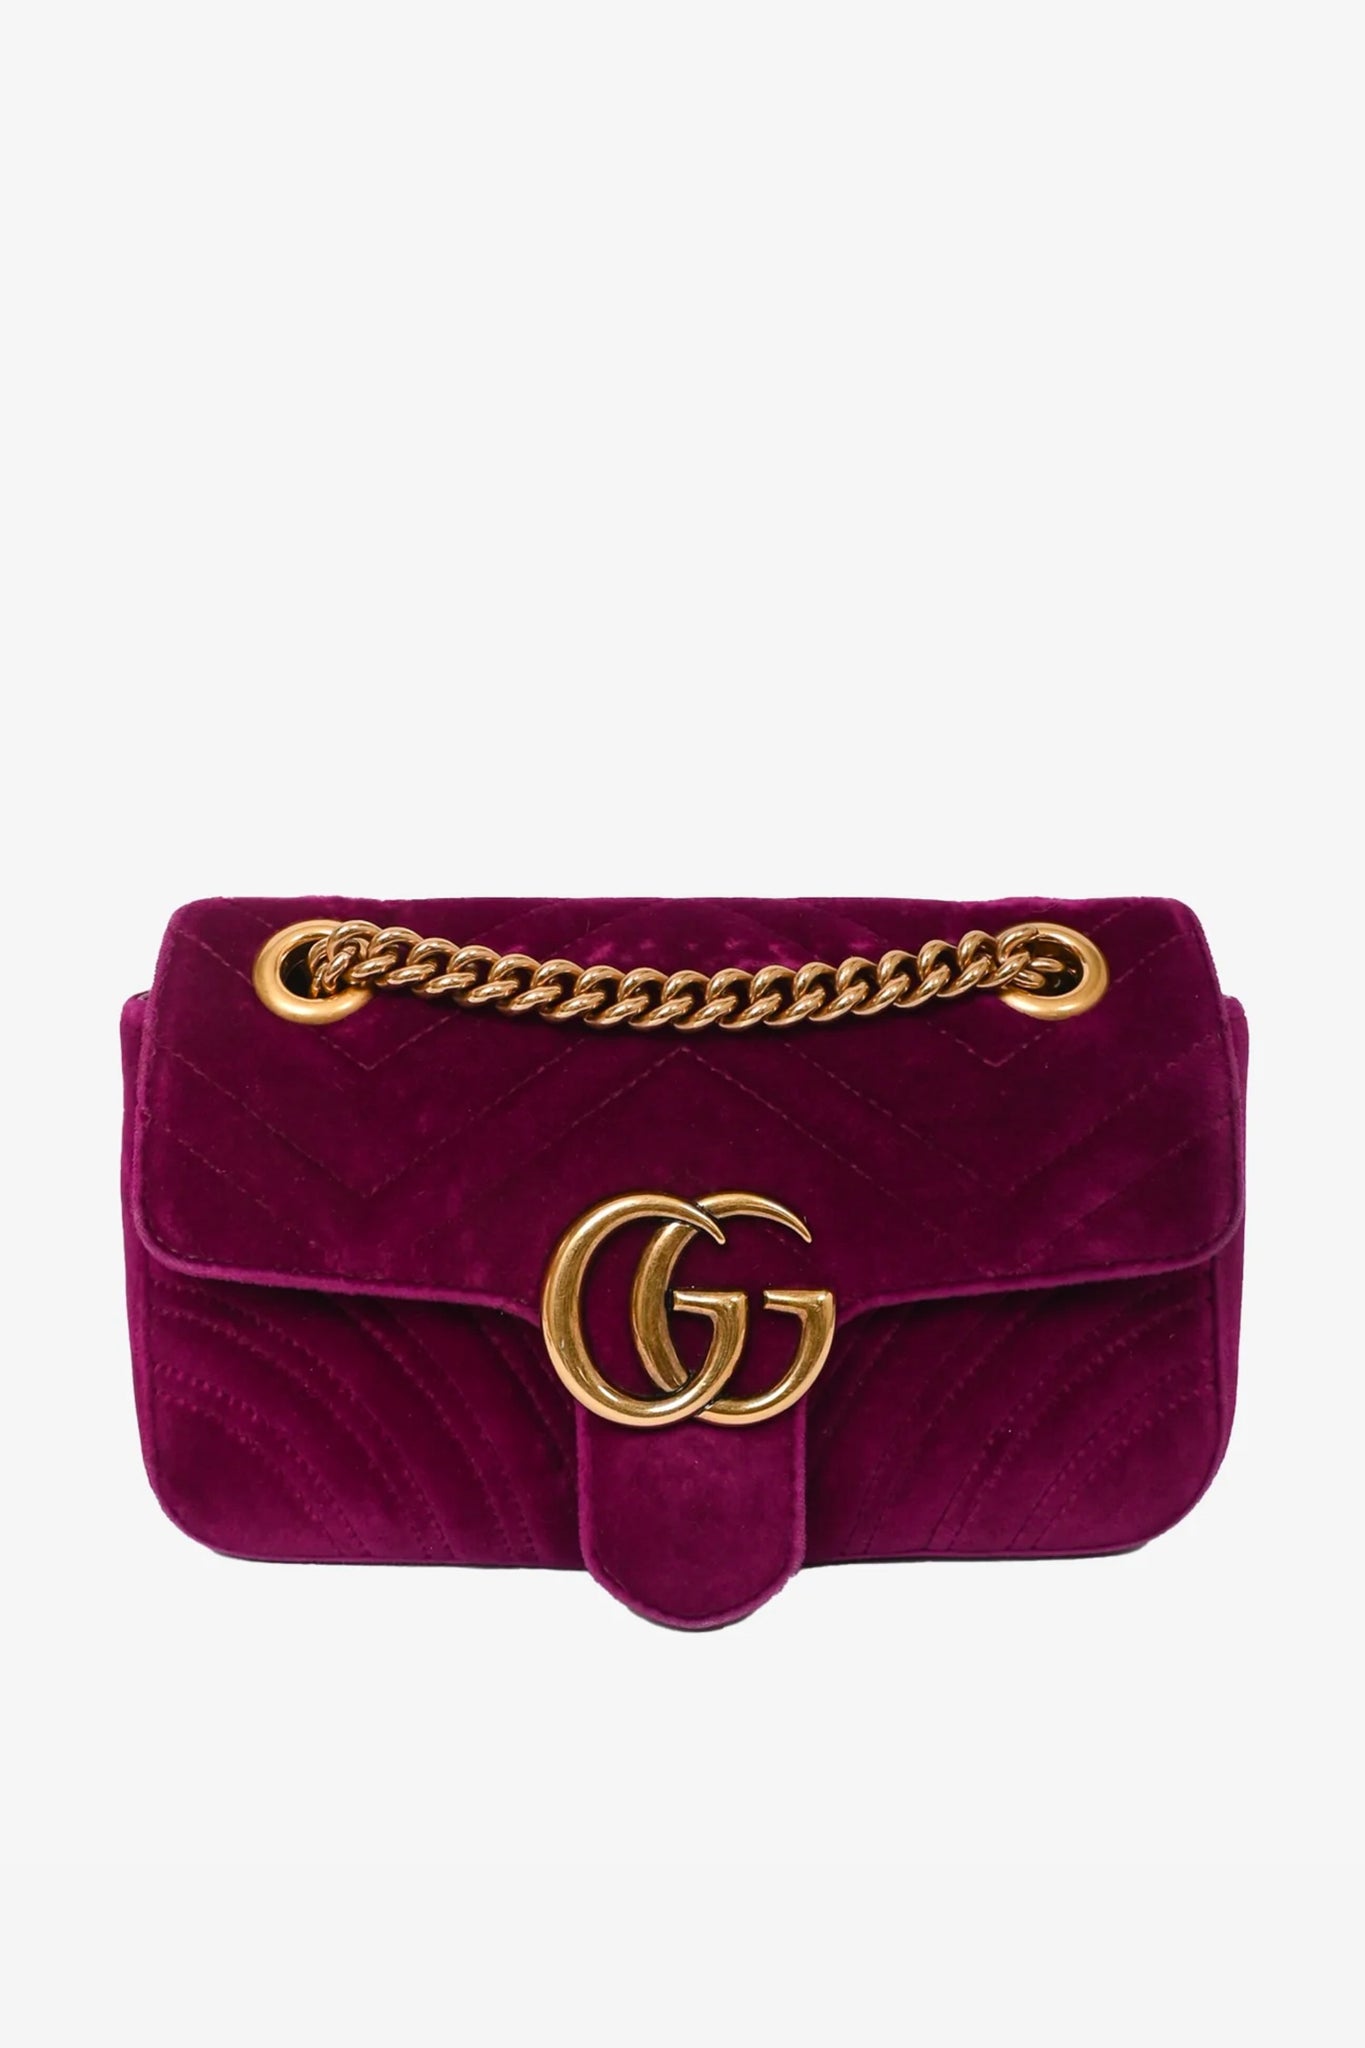 Gucci. Secondhand designer resale